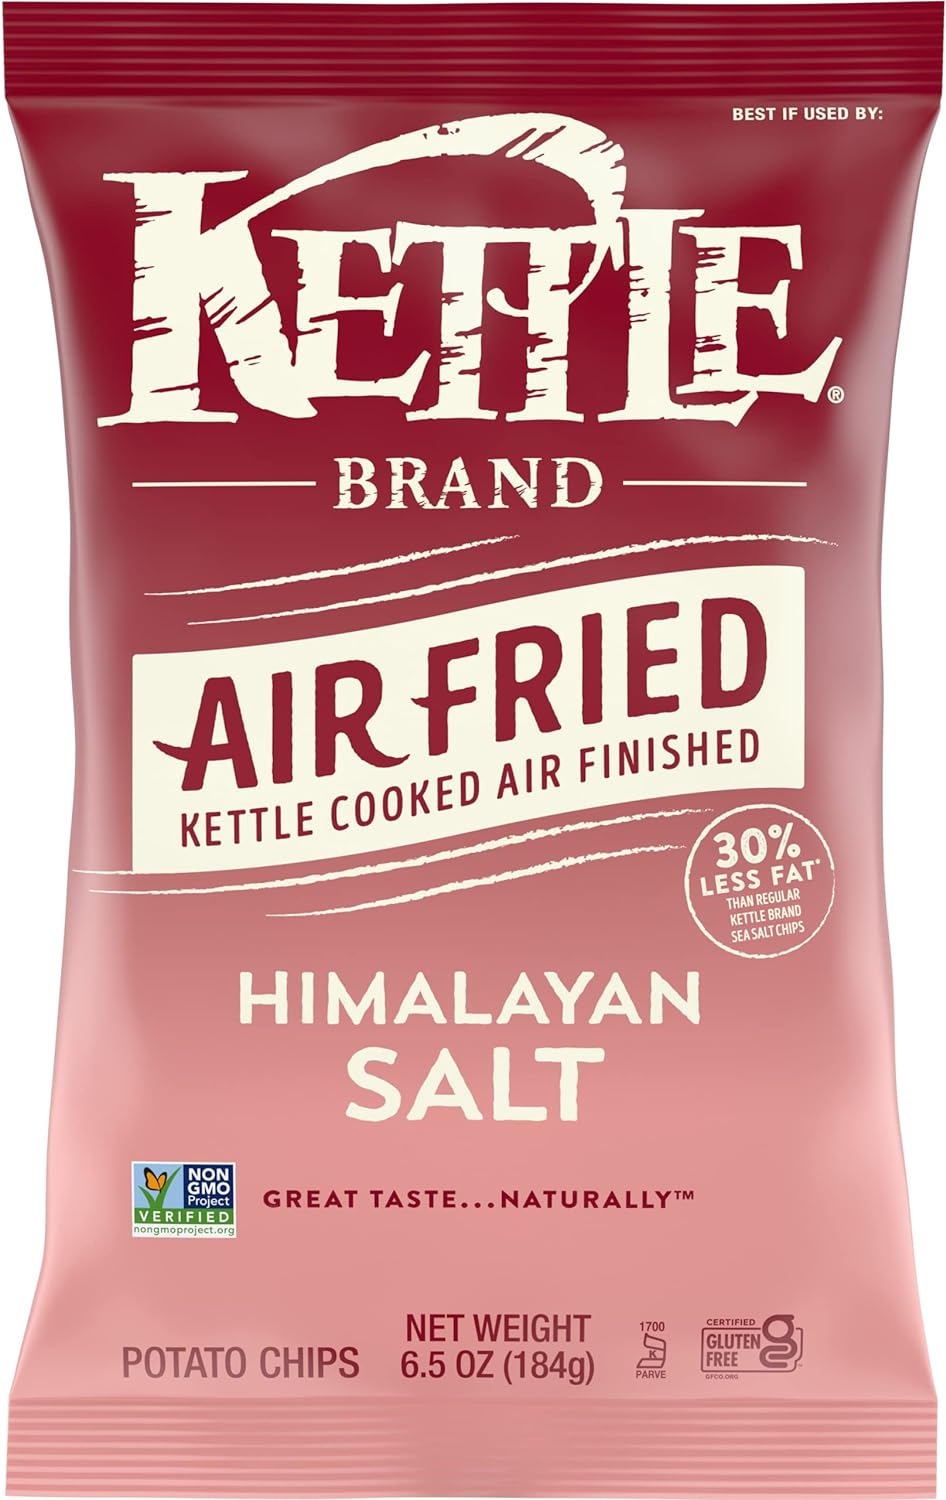 Kettle Brand Air Fried Himalayan Salt Potato Chips - Case of 12